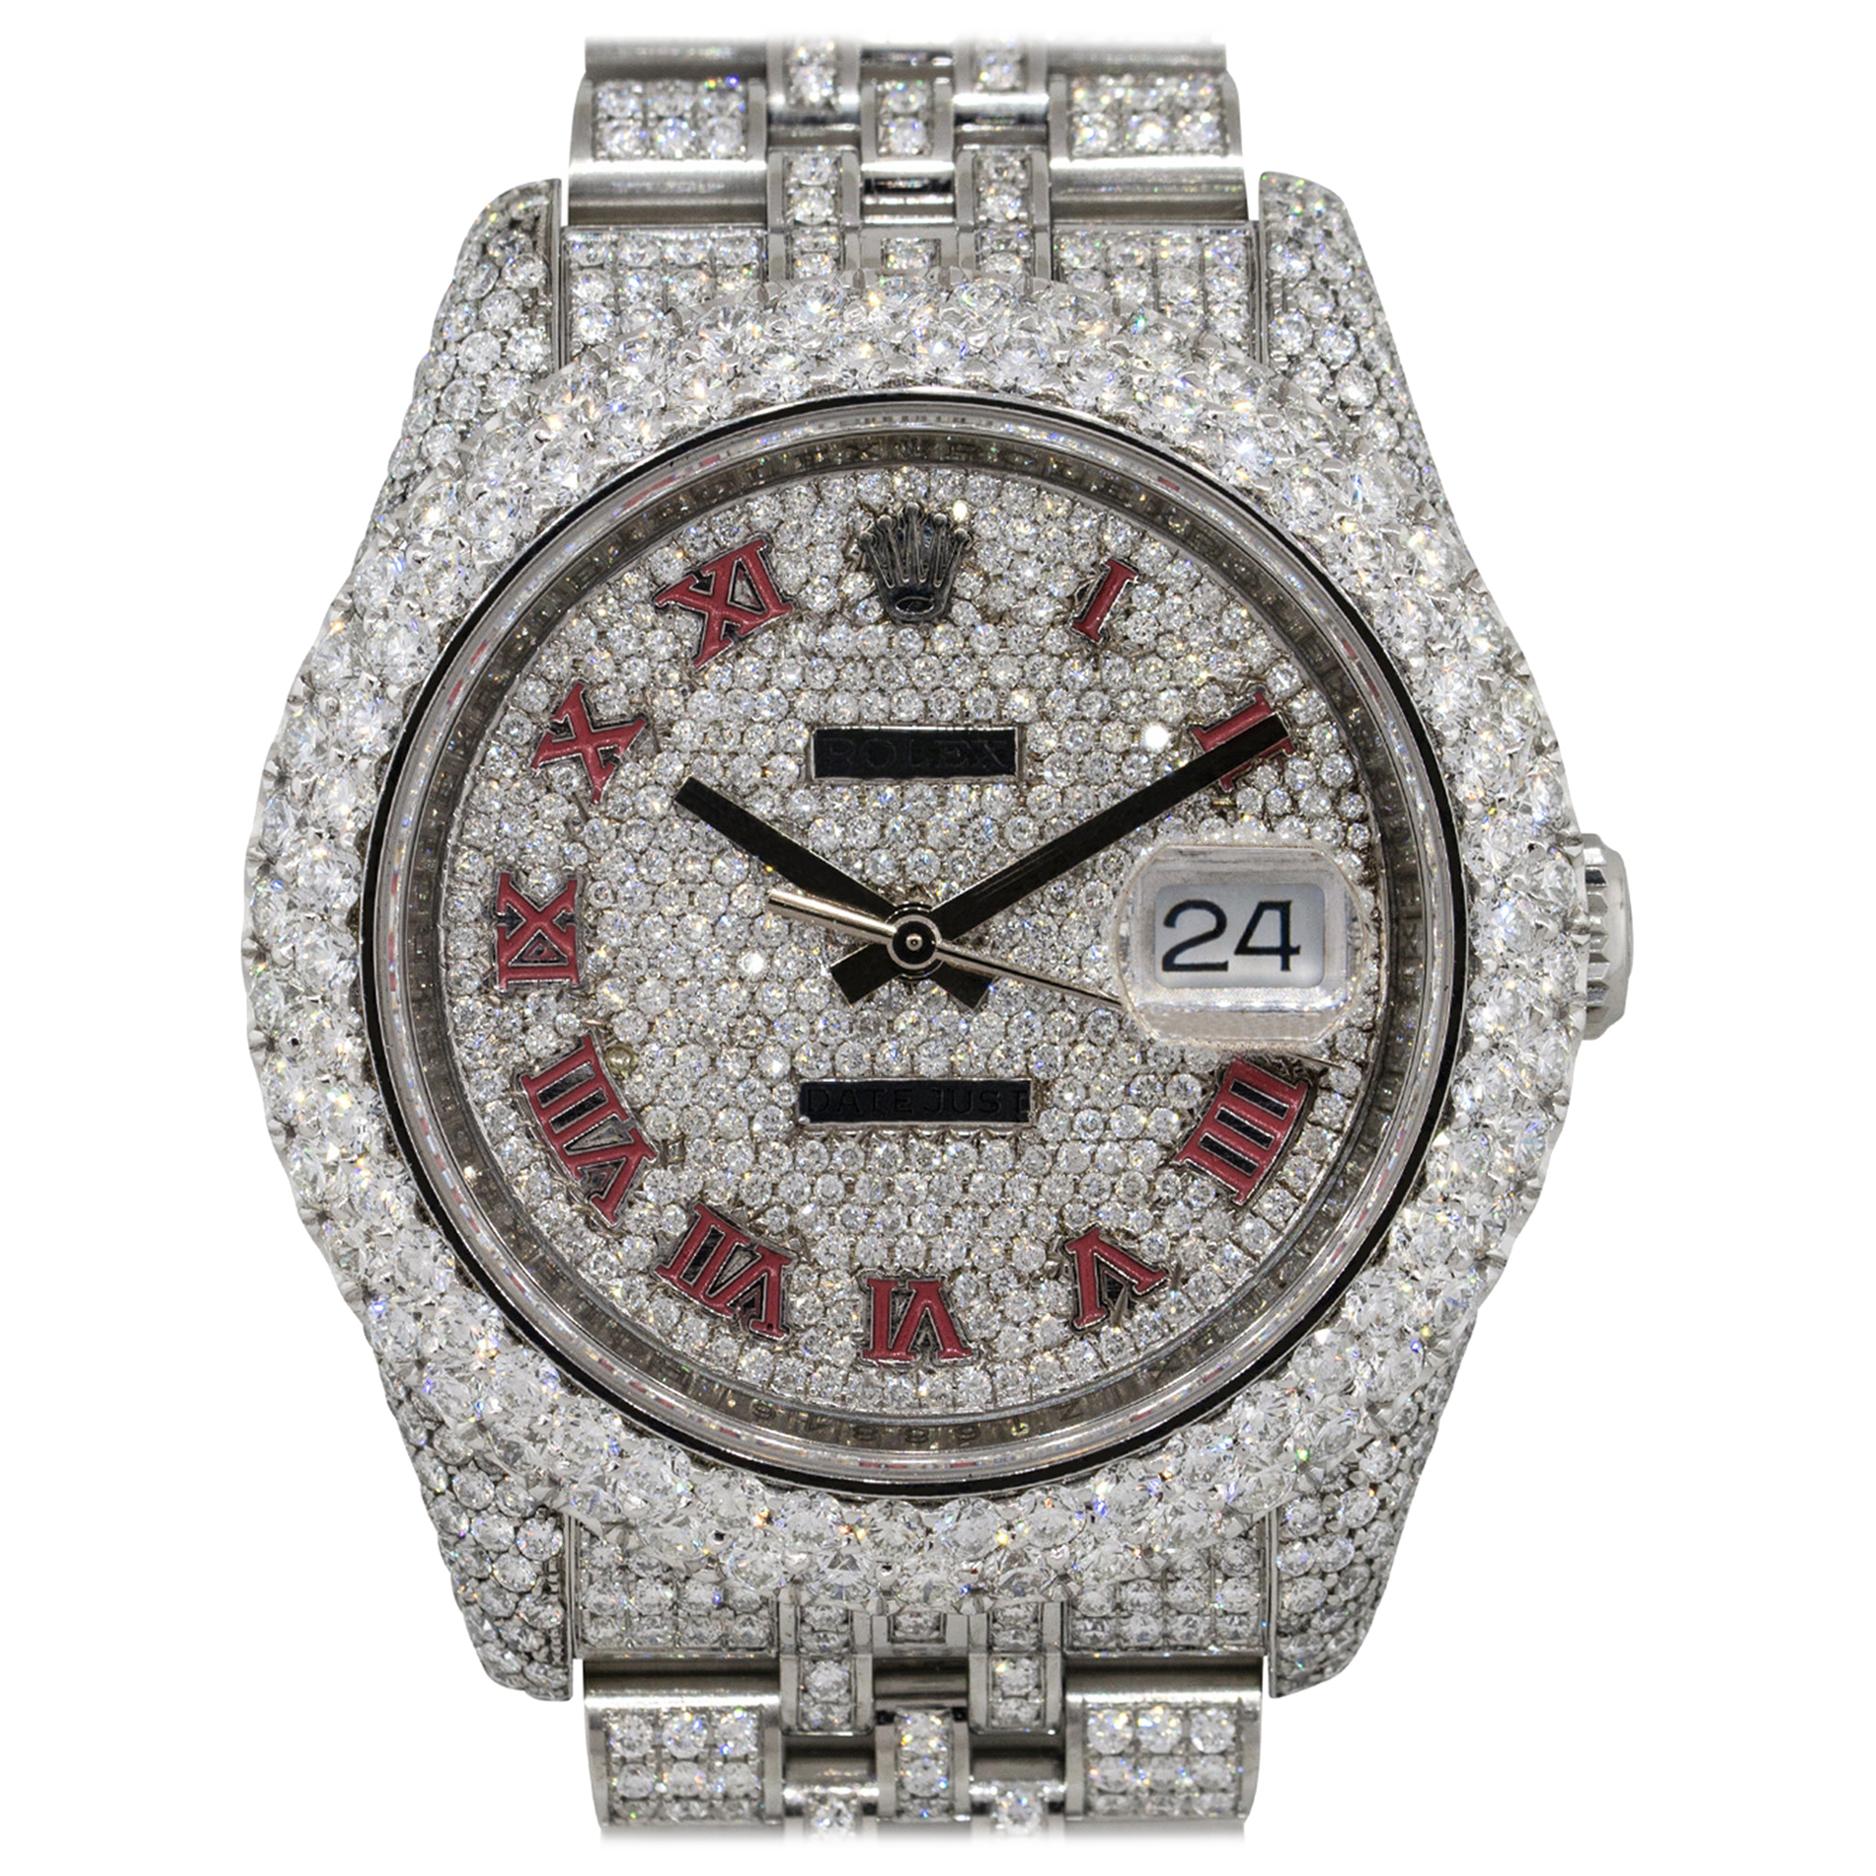 12.99 Carat Rolex 116234 Datejust Stainless Steel Diamond Pave Watch